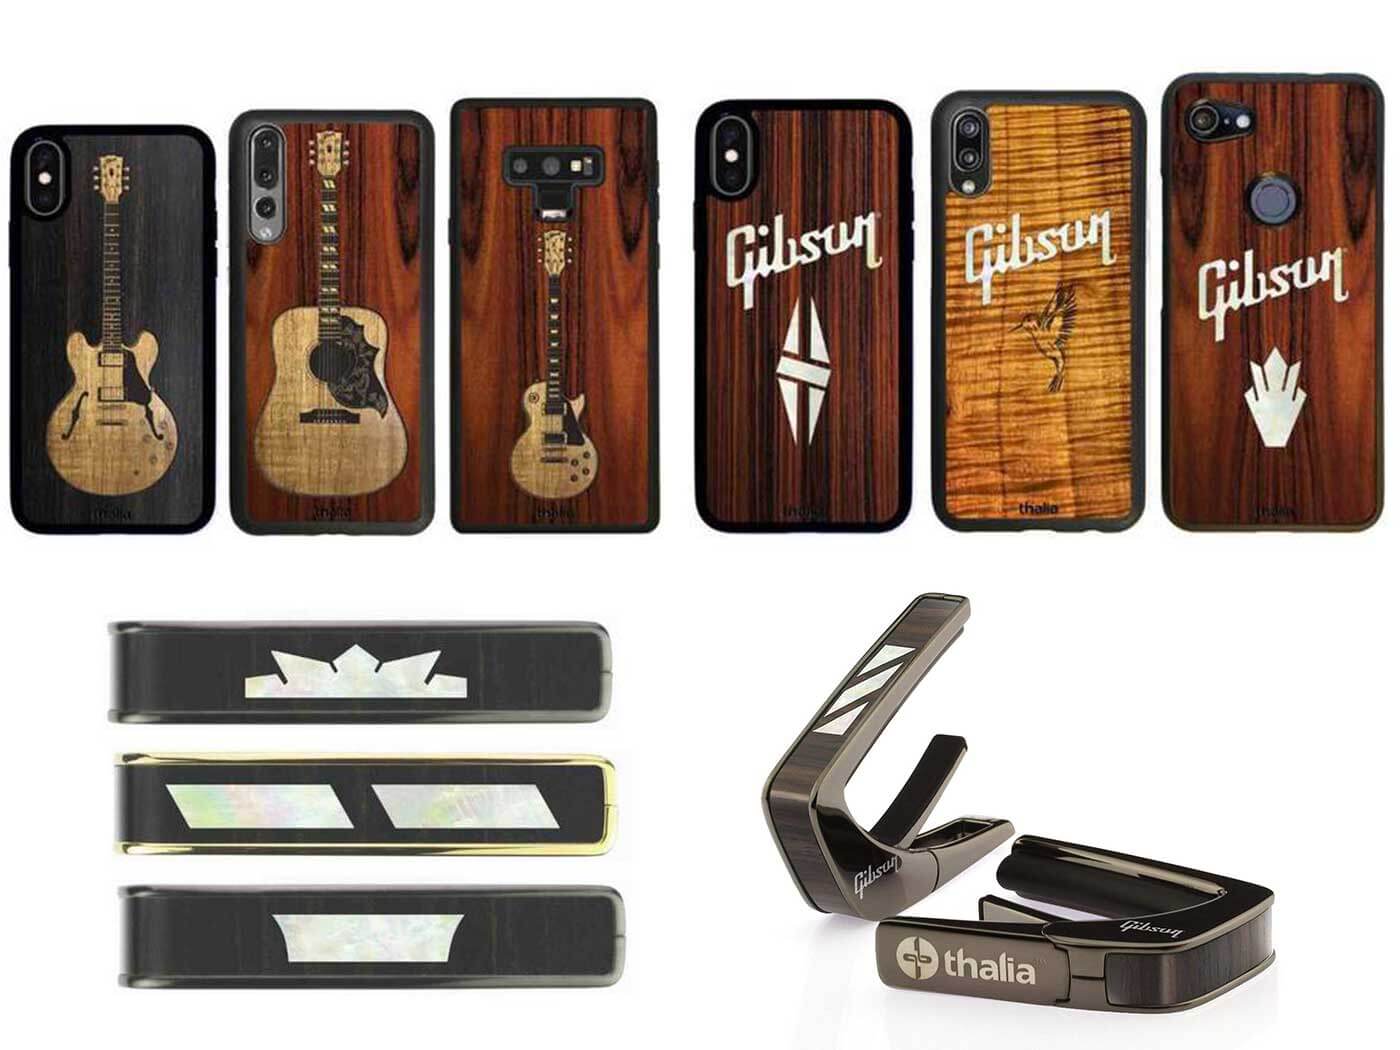 The Gibson/ Thalia accessories